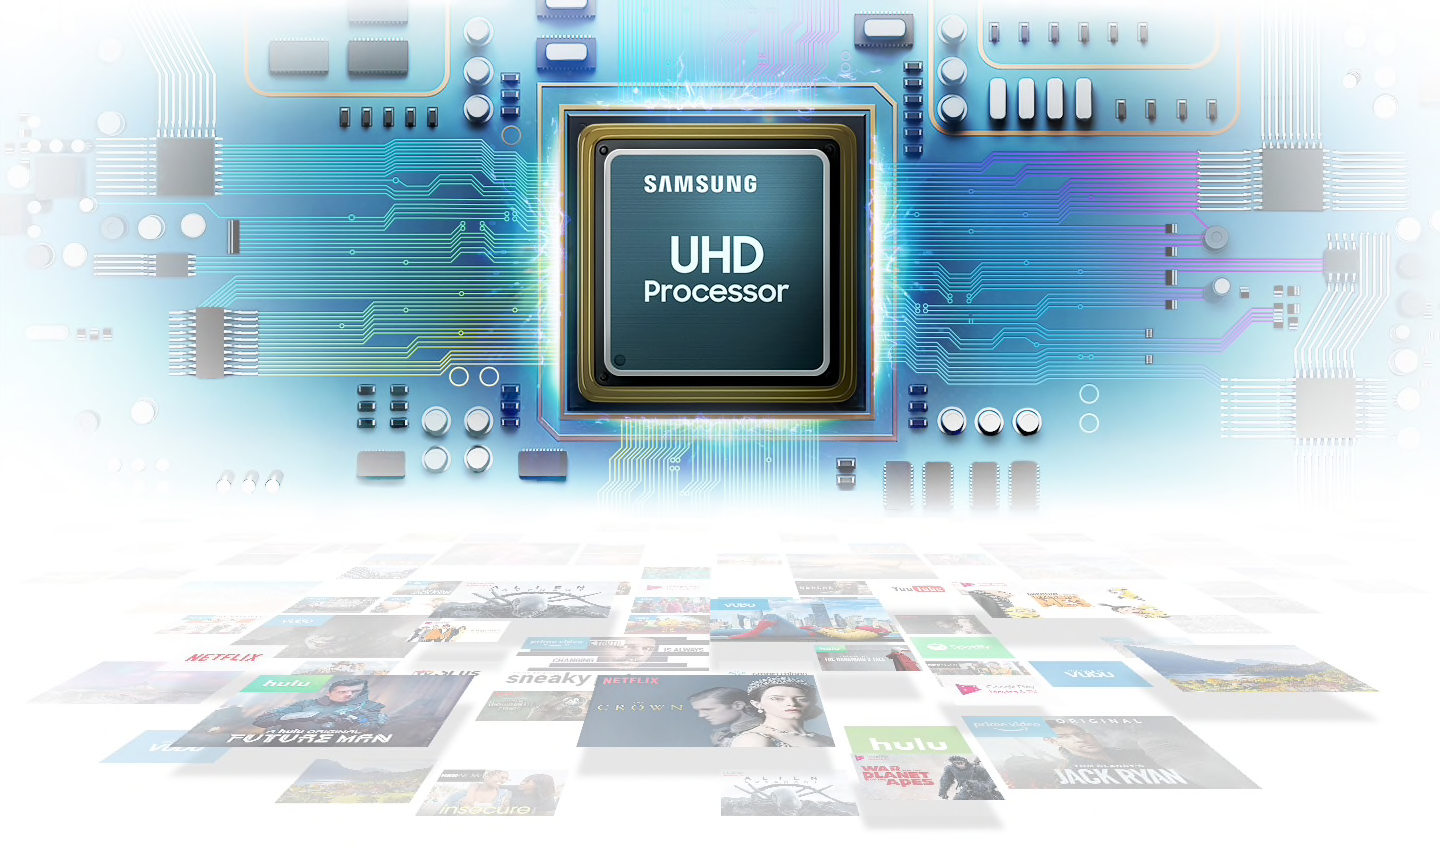 Samsung UHD processor